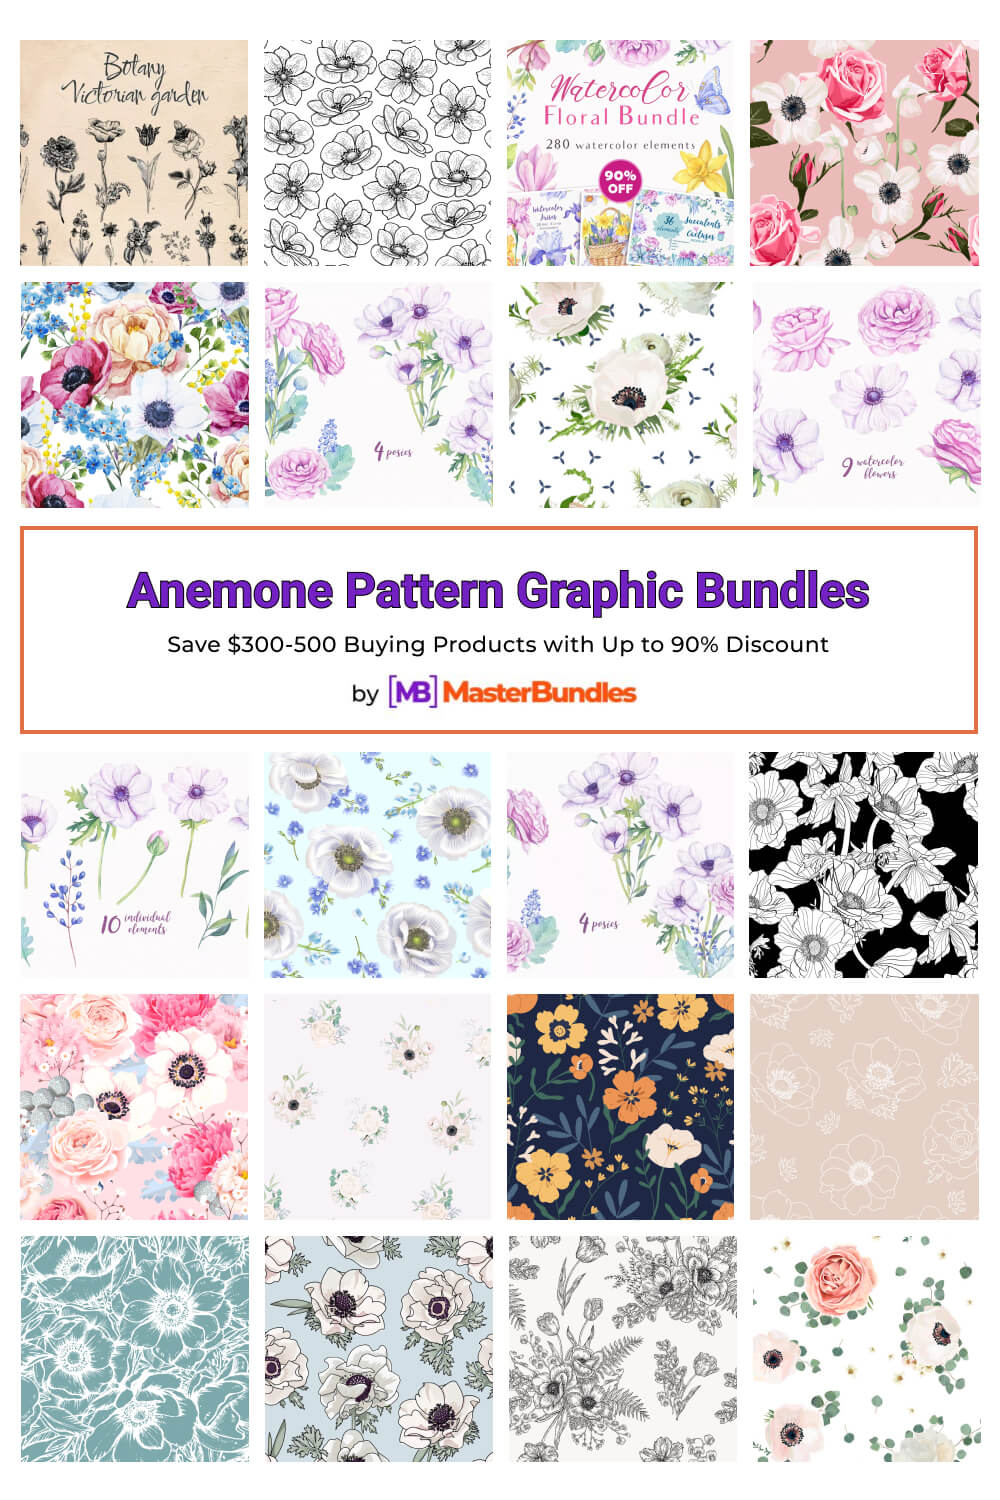 anemone pattern graphic bundles pinterest image.